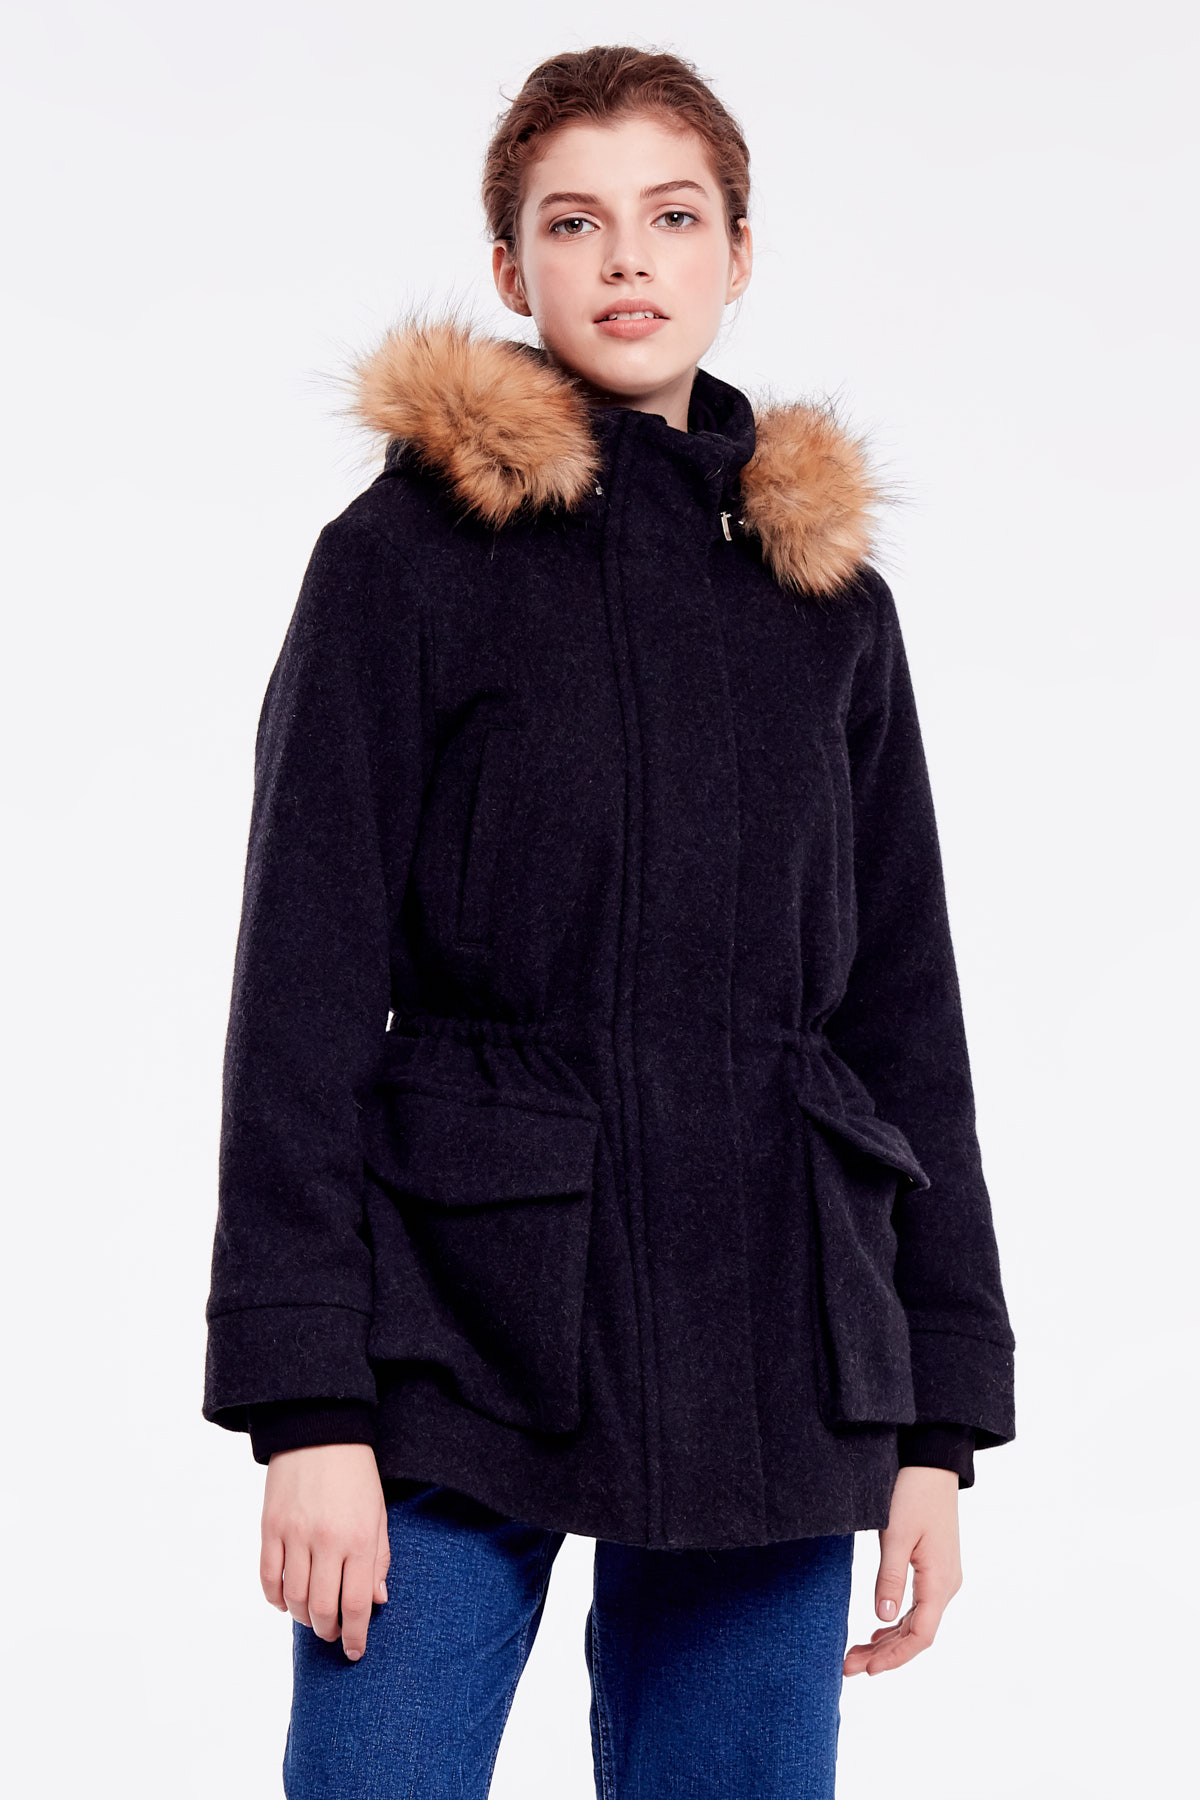 Black coat with hood, photo 1